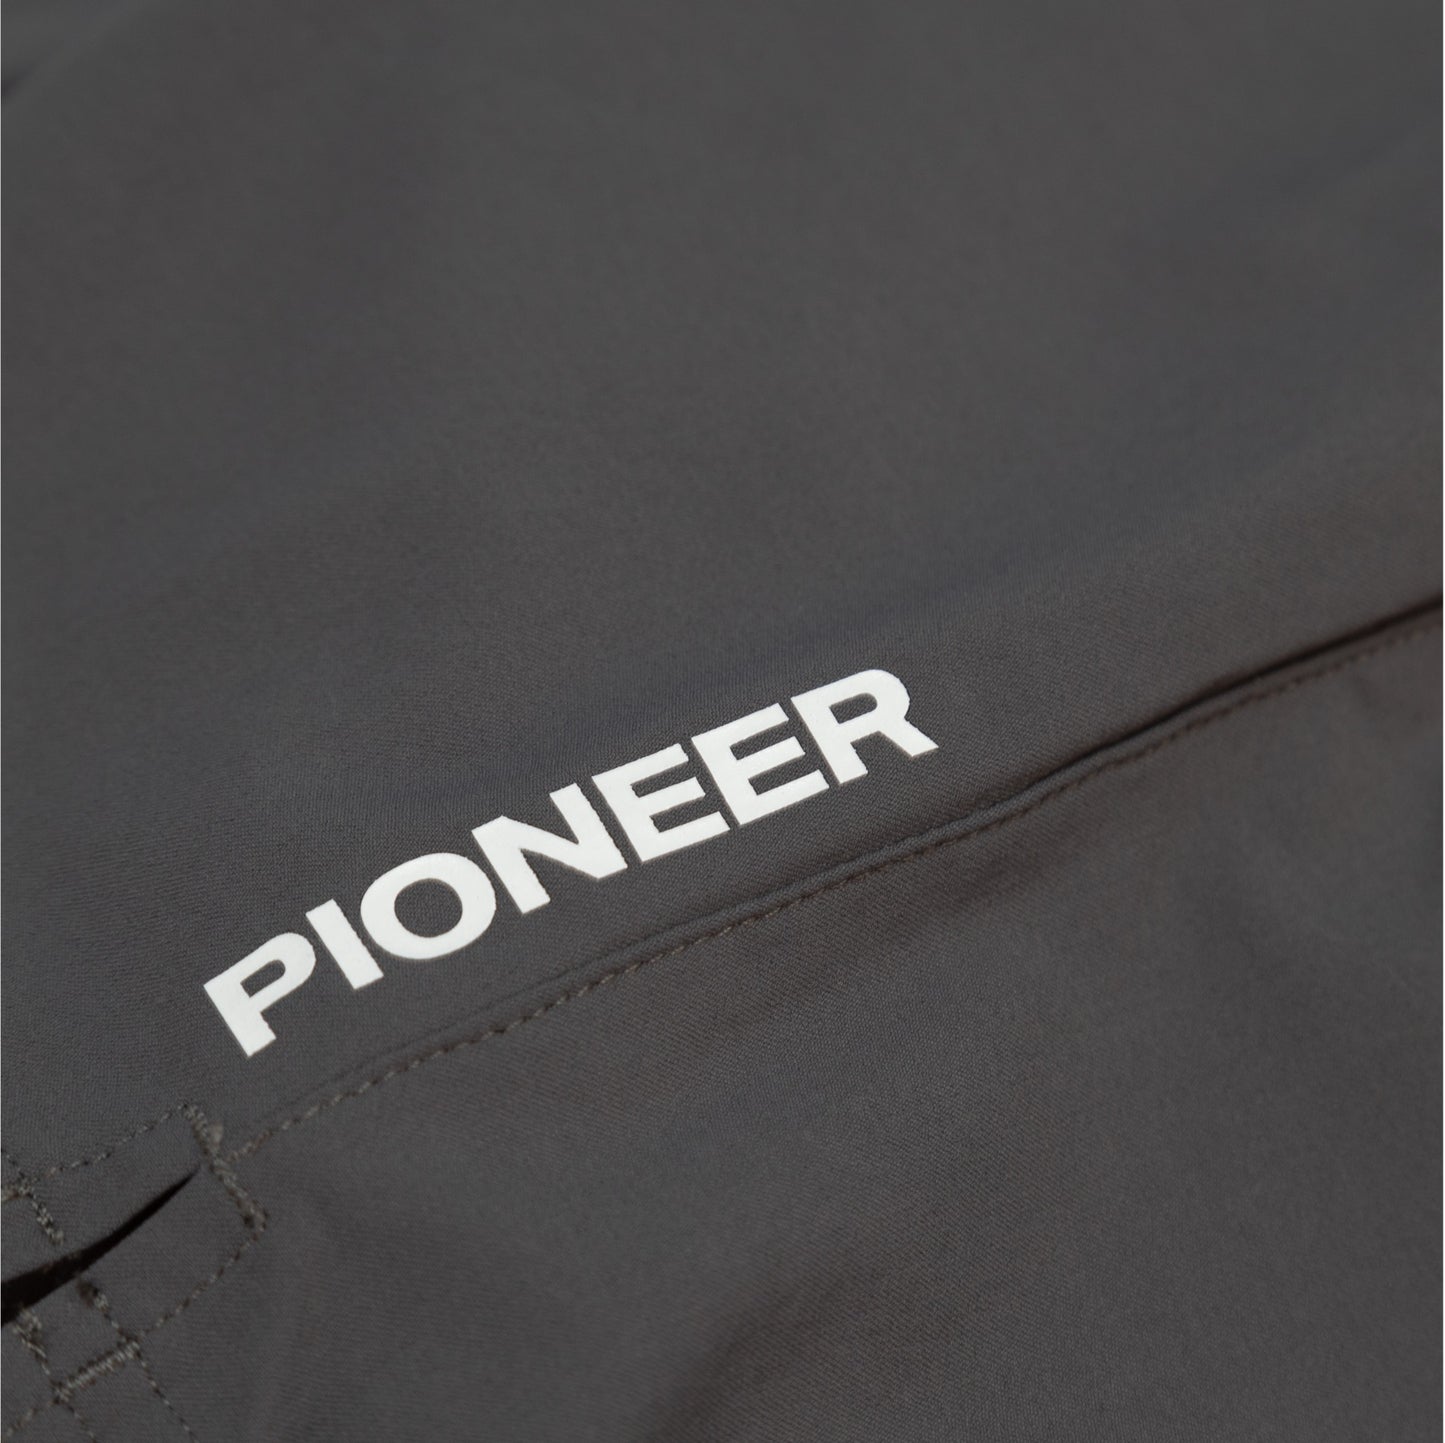 Poynton Pioneer Recycled Shorts